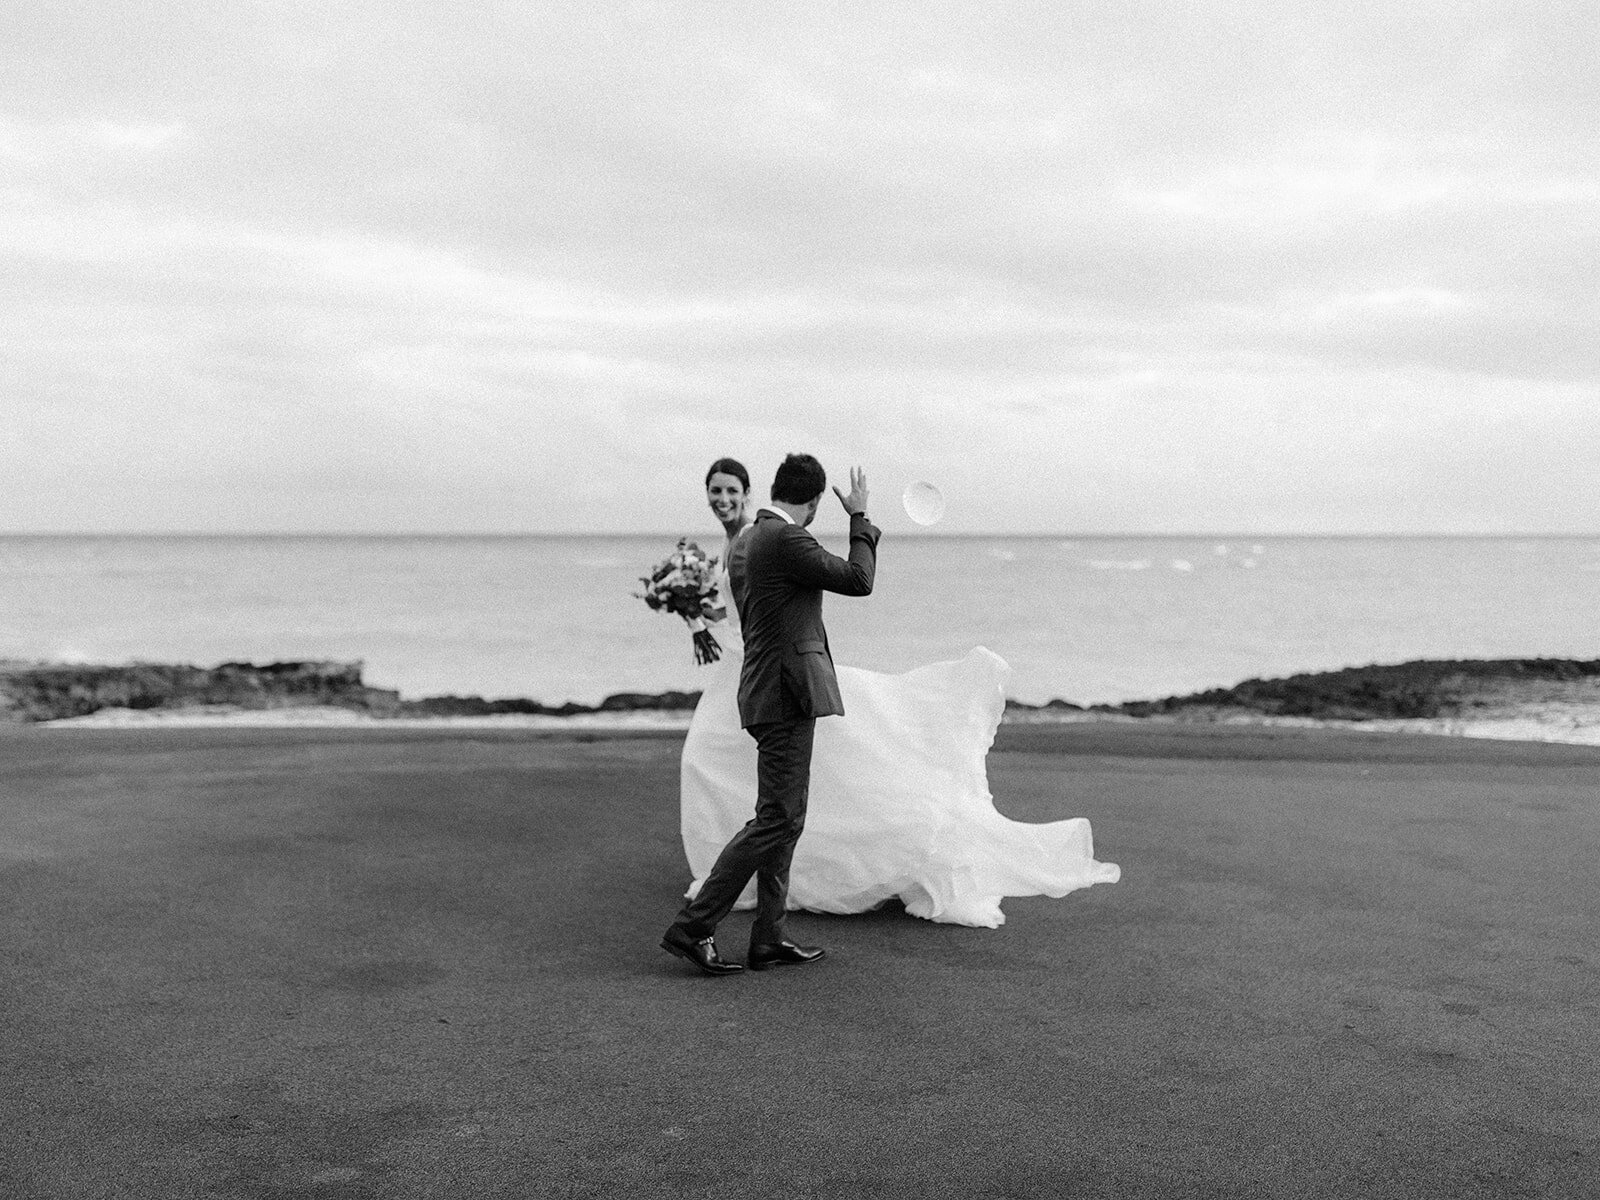 dominican_republic_wedding_photographer_theStudiobyAP_www.dominicanrepublicphotography.com30